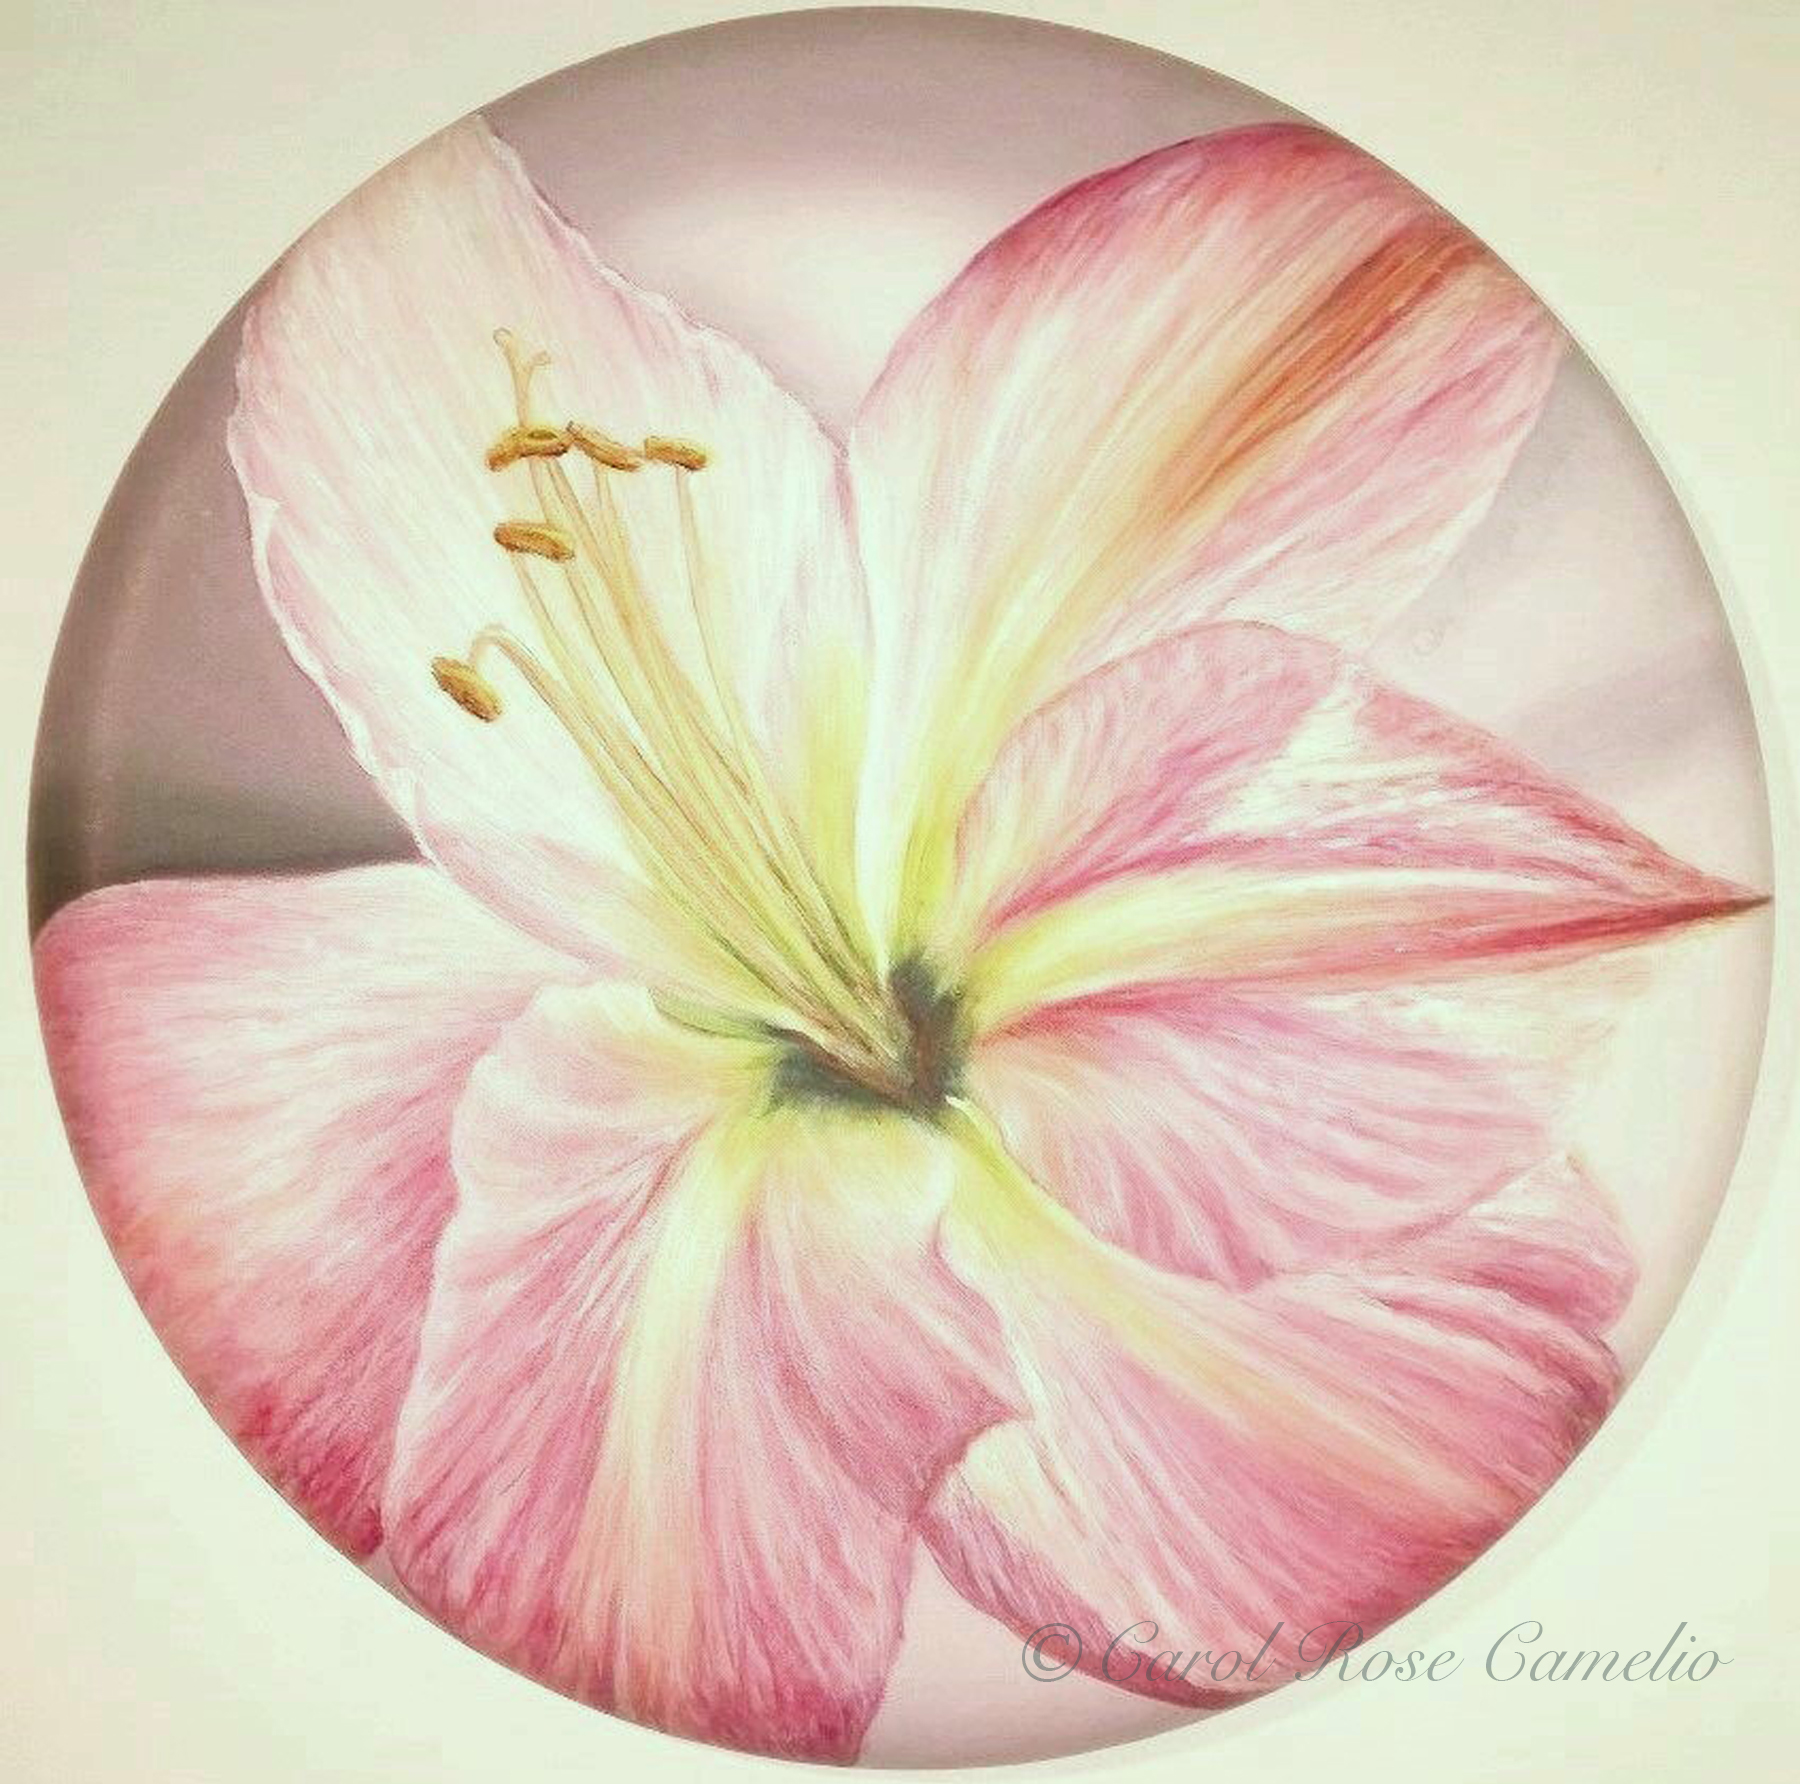 Amaryllis II: A closeup of a bright pink amaryllis flower.